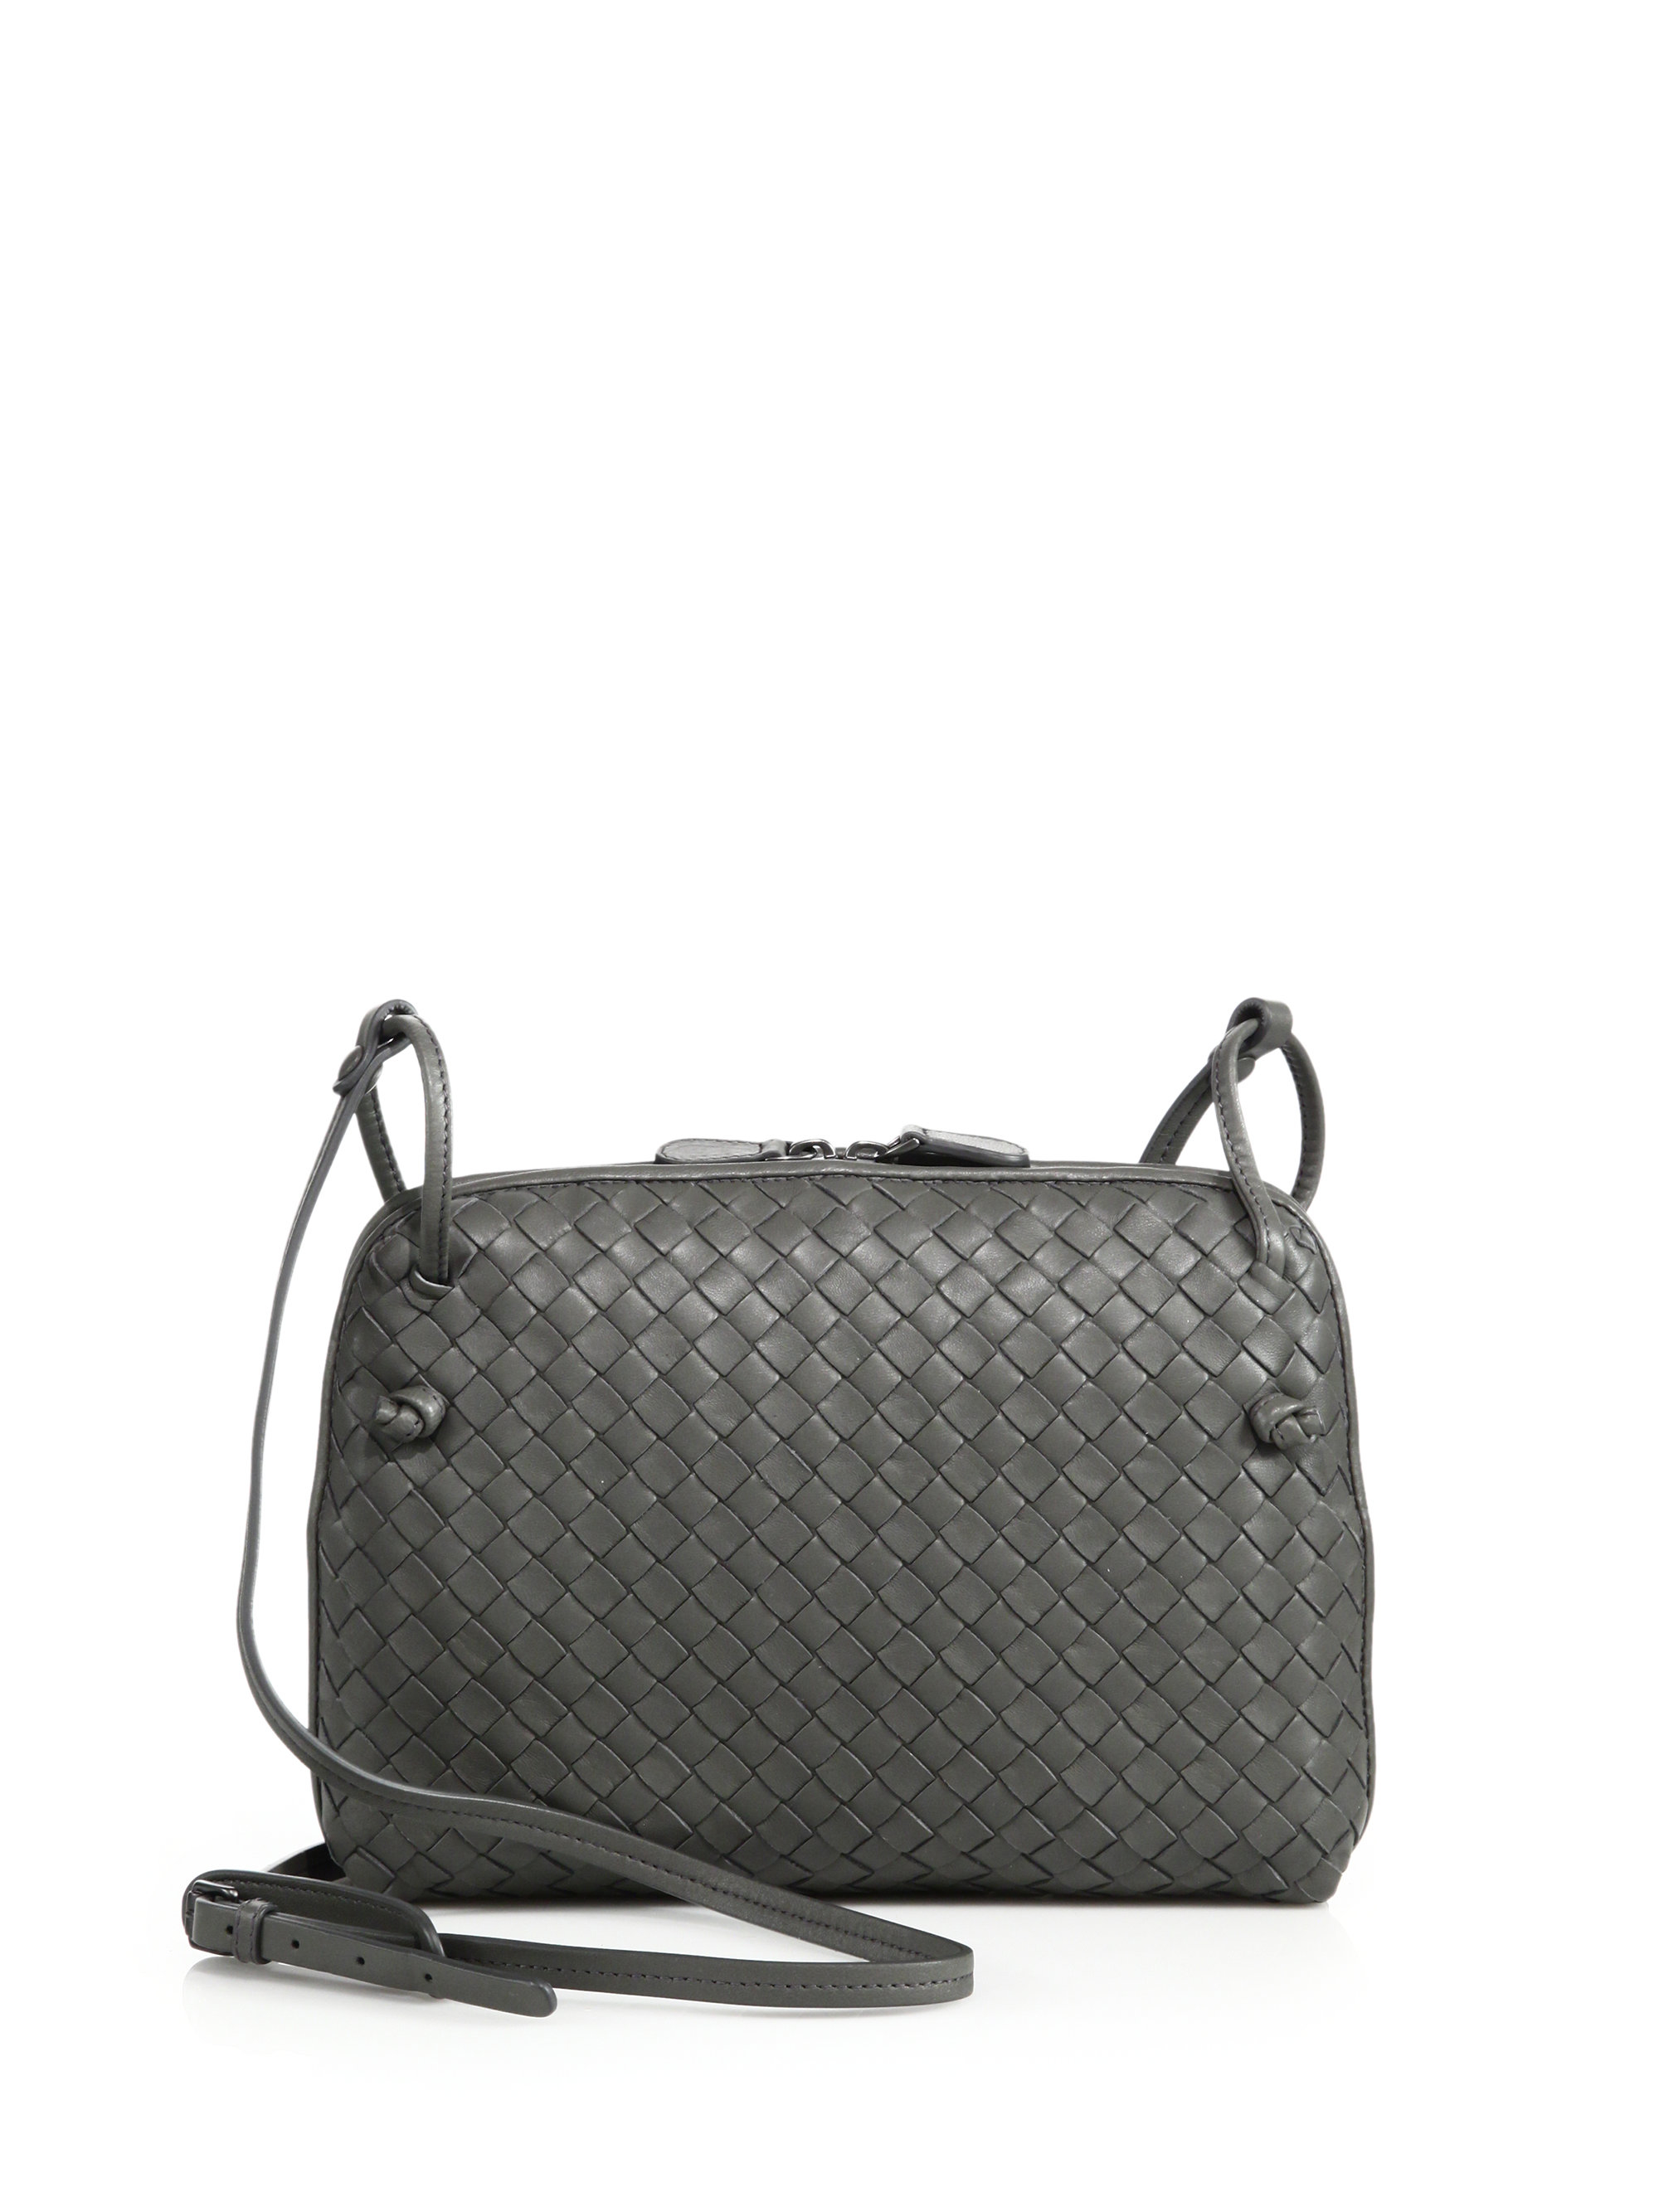 Lyst - Bottega Veneta Small Woven Leather Pillow Bag in Gray